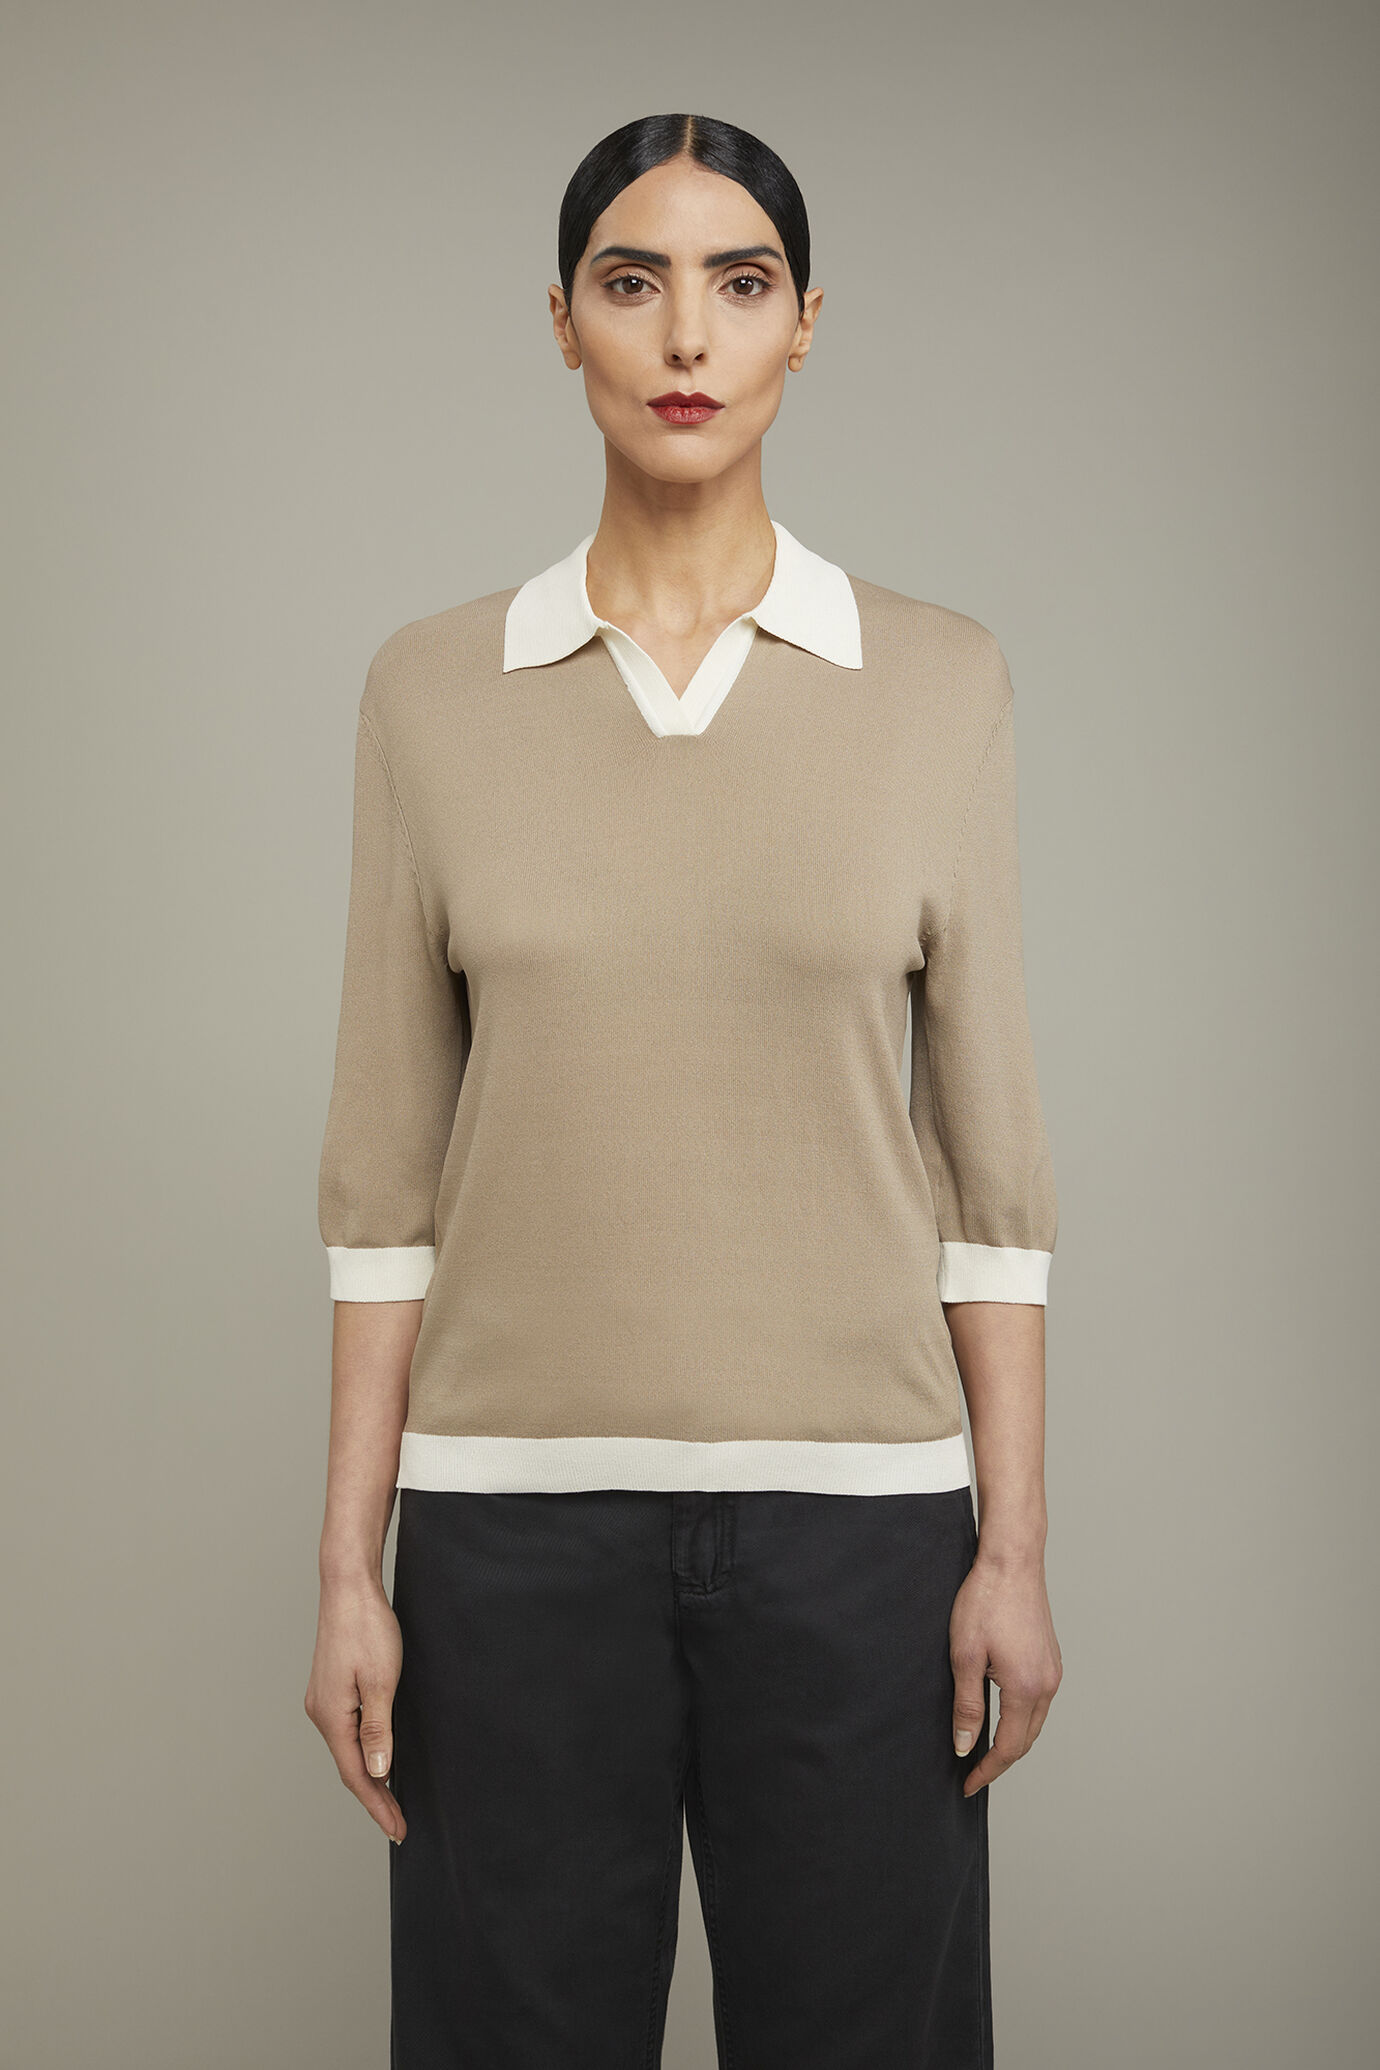 Damen-Poloshirt mit 3/4-Ärmeln in normaler Passform